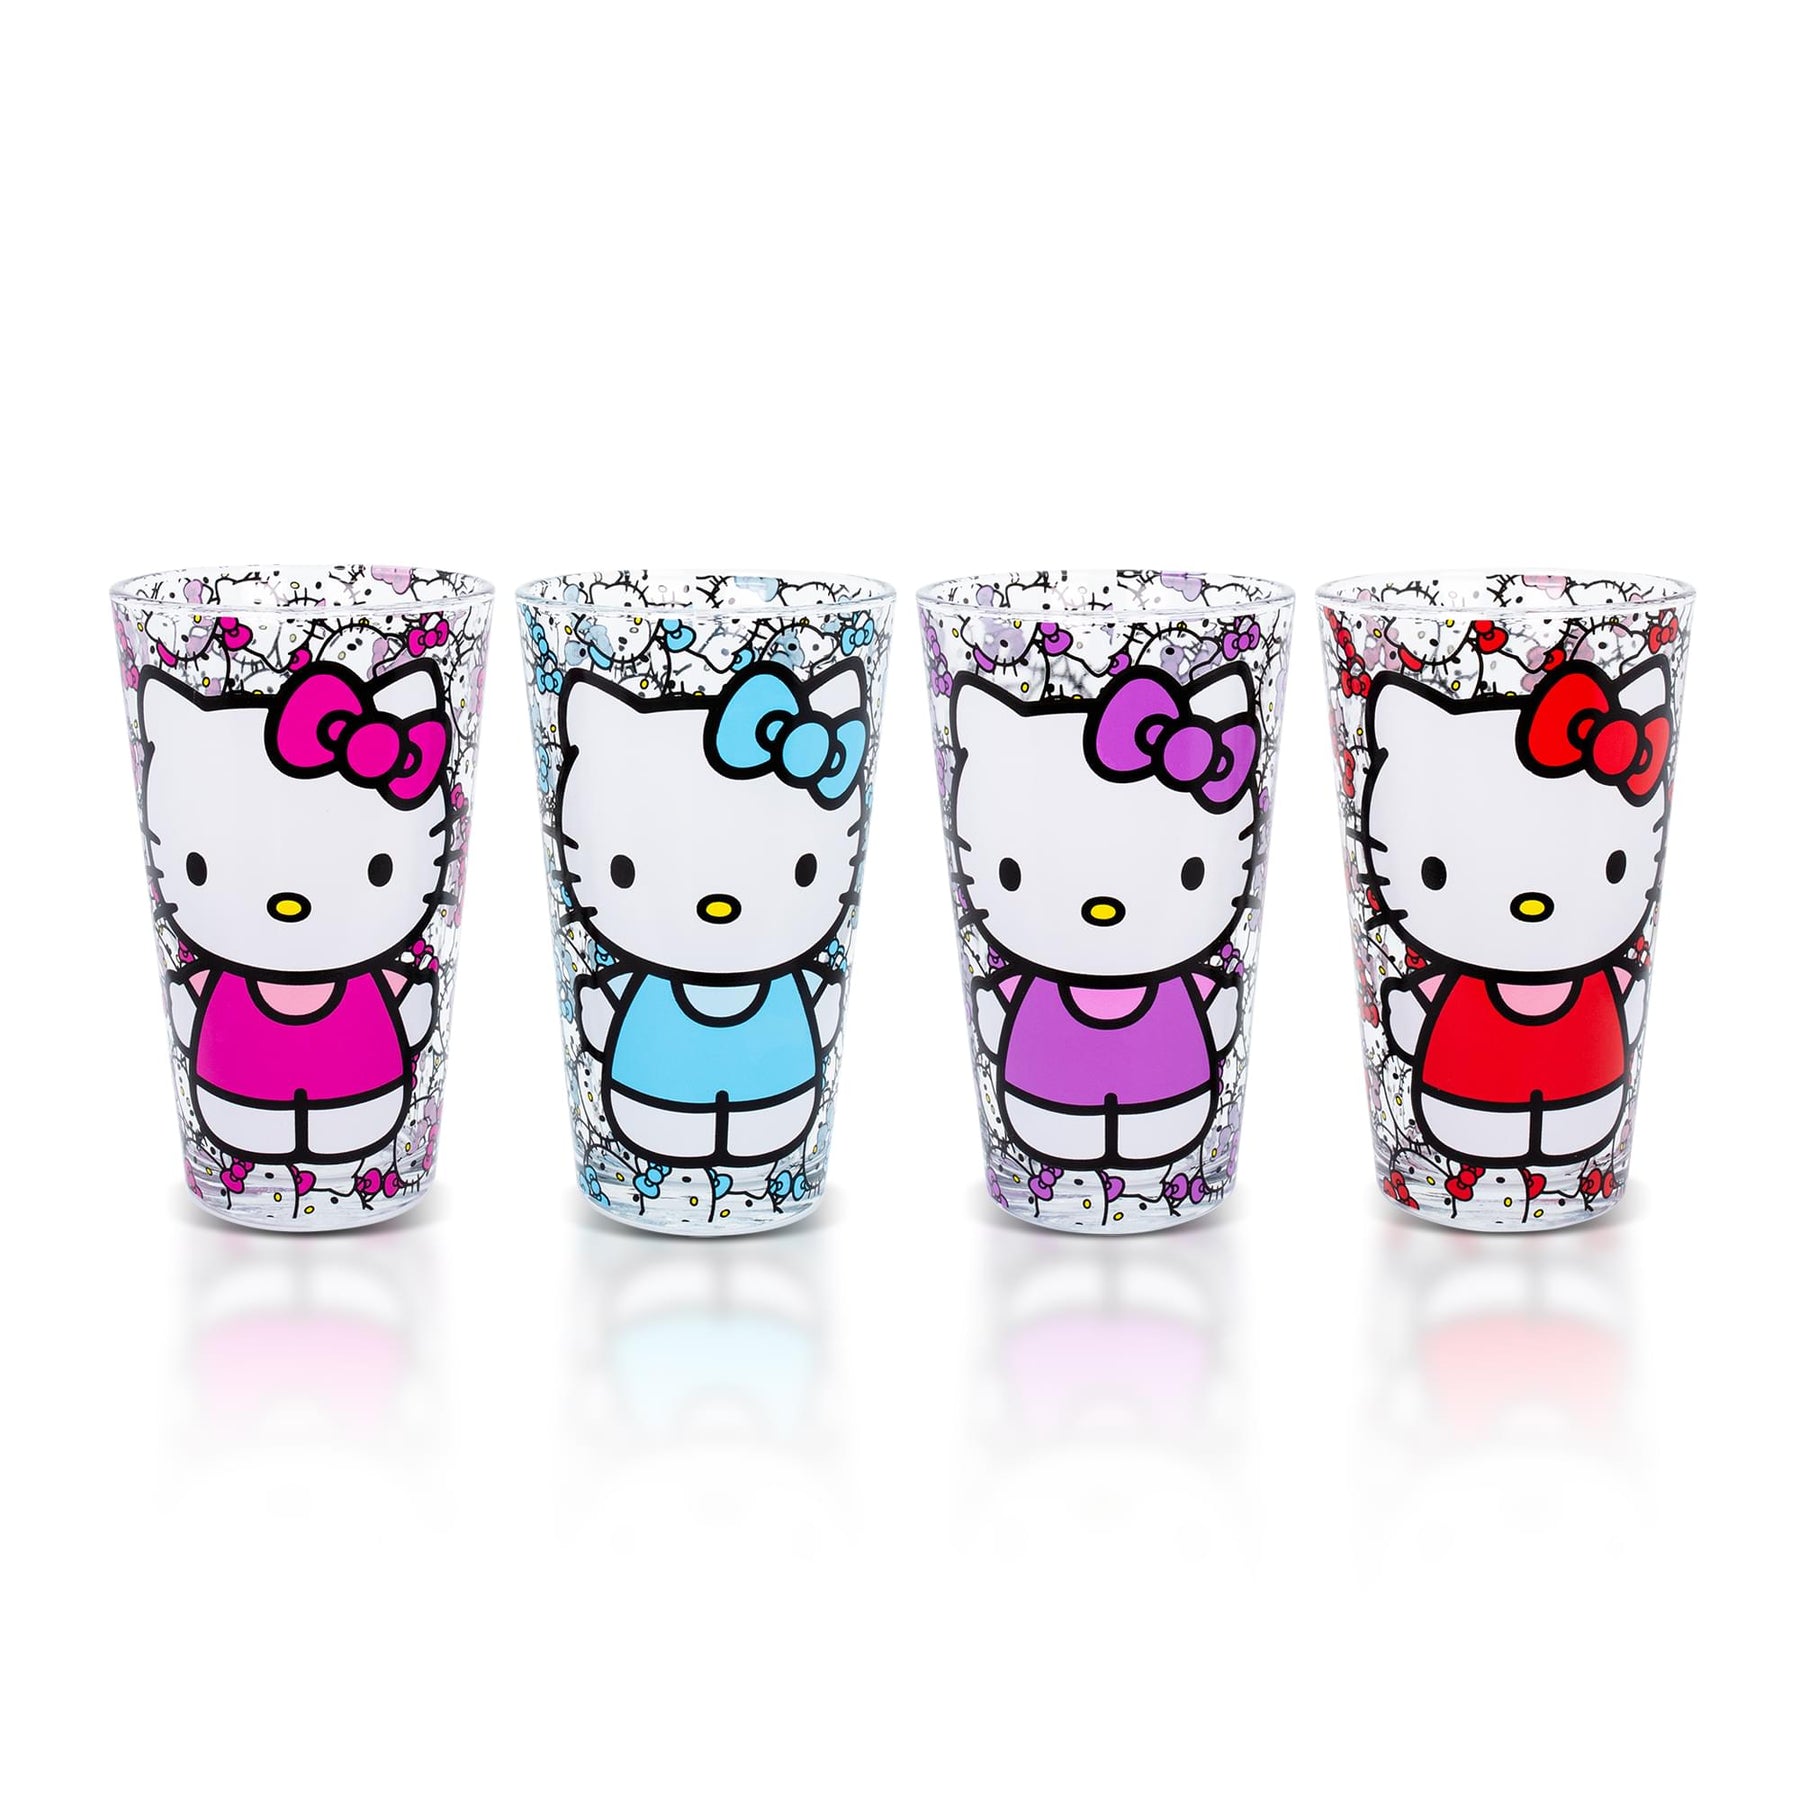 Hello Kitty Delight: 16oz Glass Tumbler - Adorable and Playful